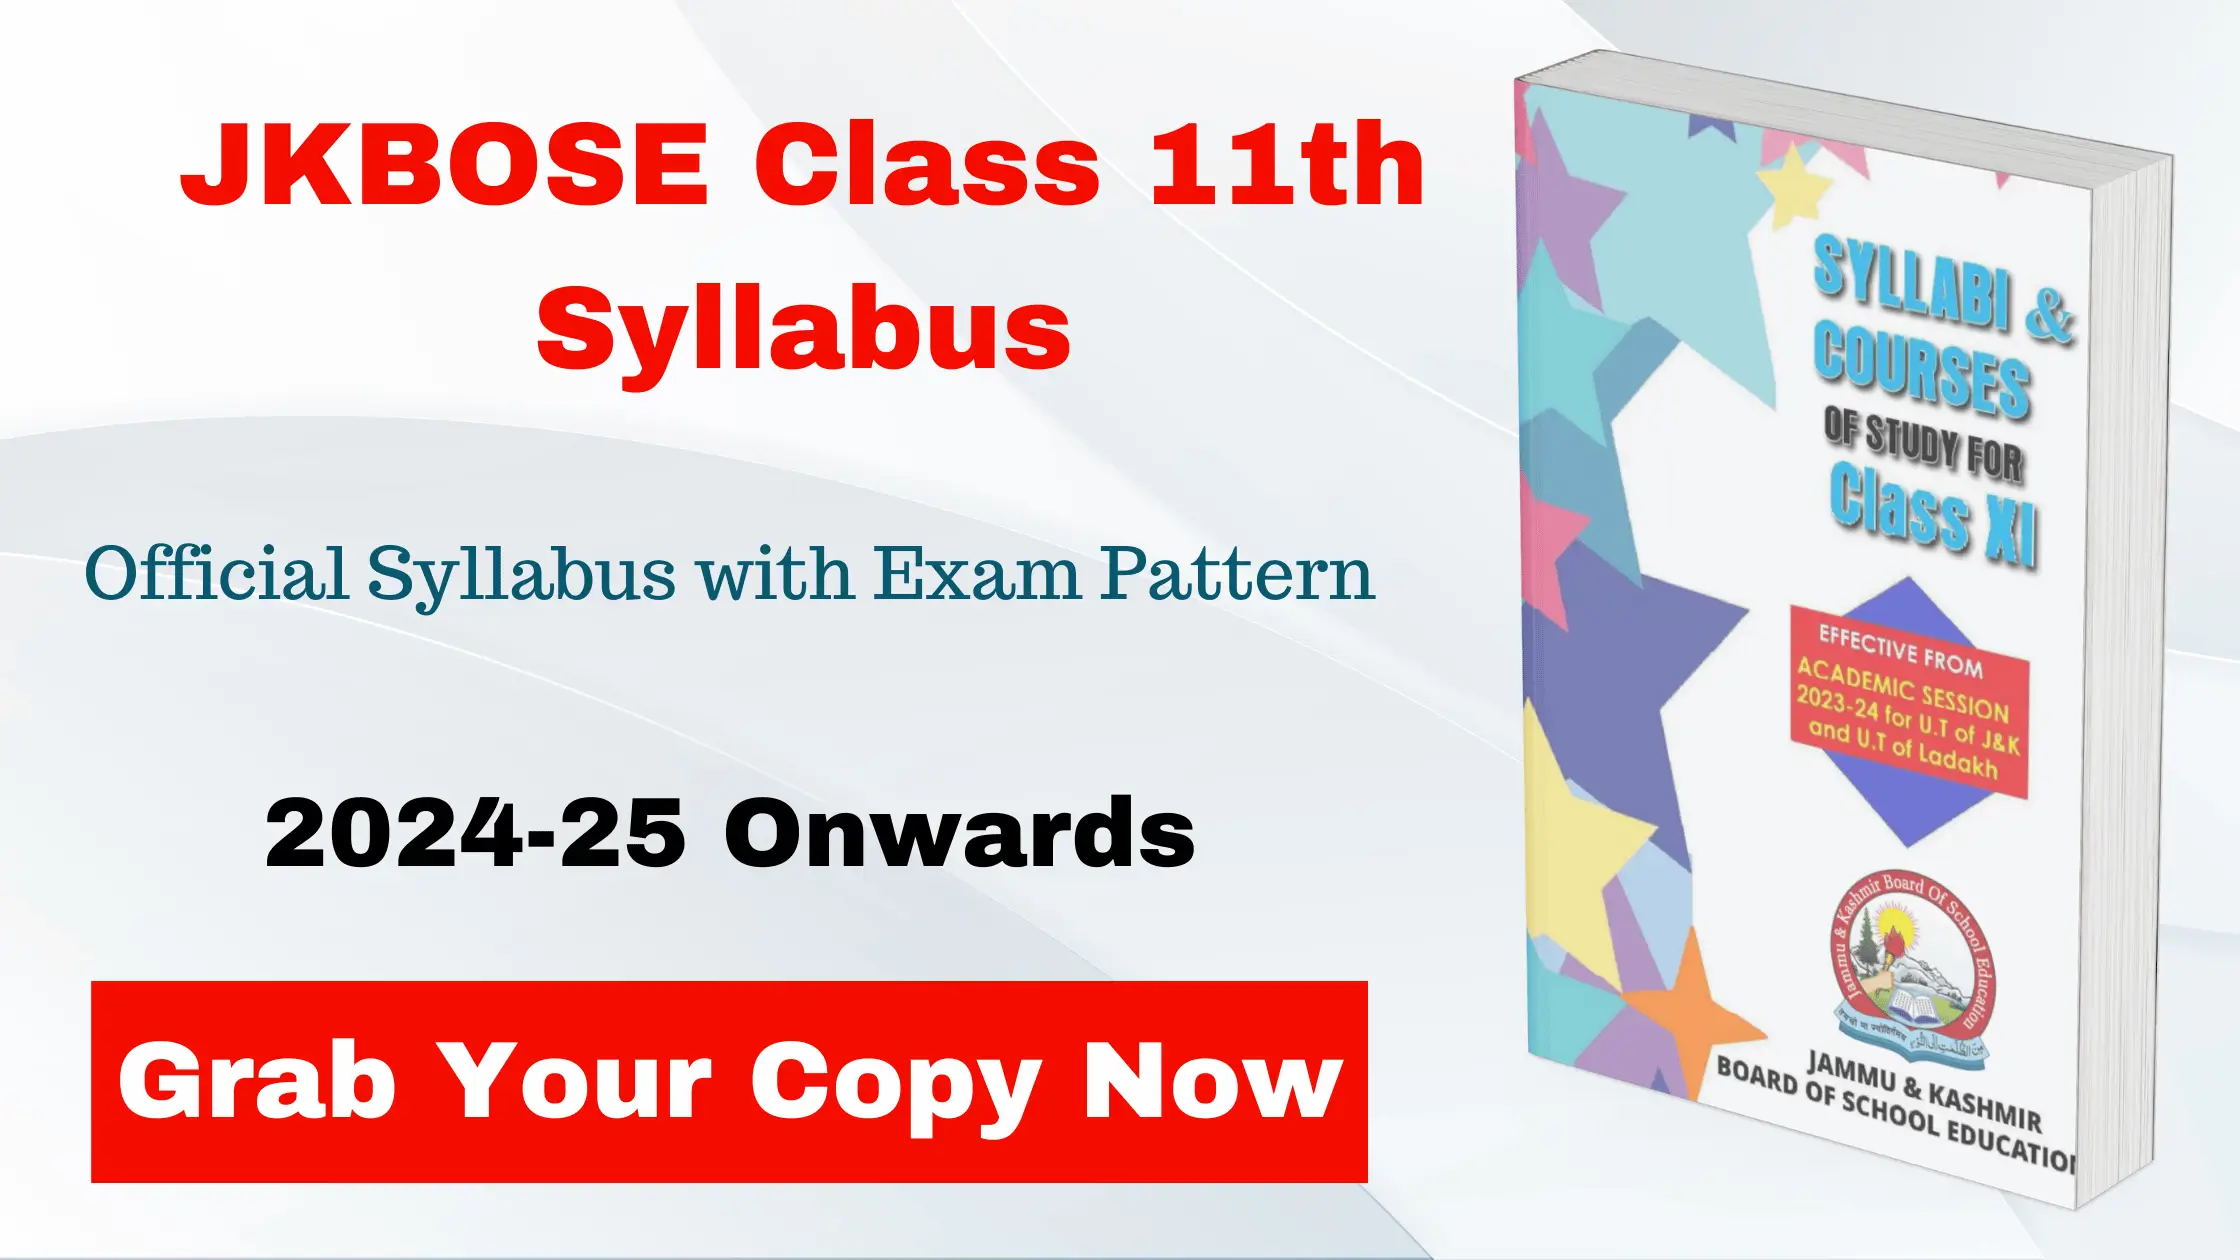 JKBOSE Class 11th Syllabus 2024 for Kashmir, Jammu, and Ladakh